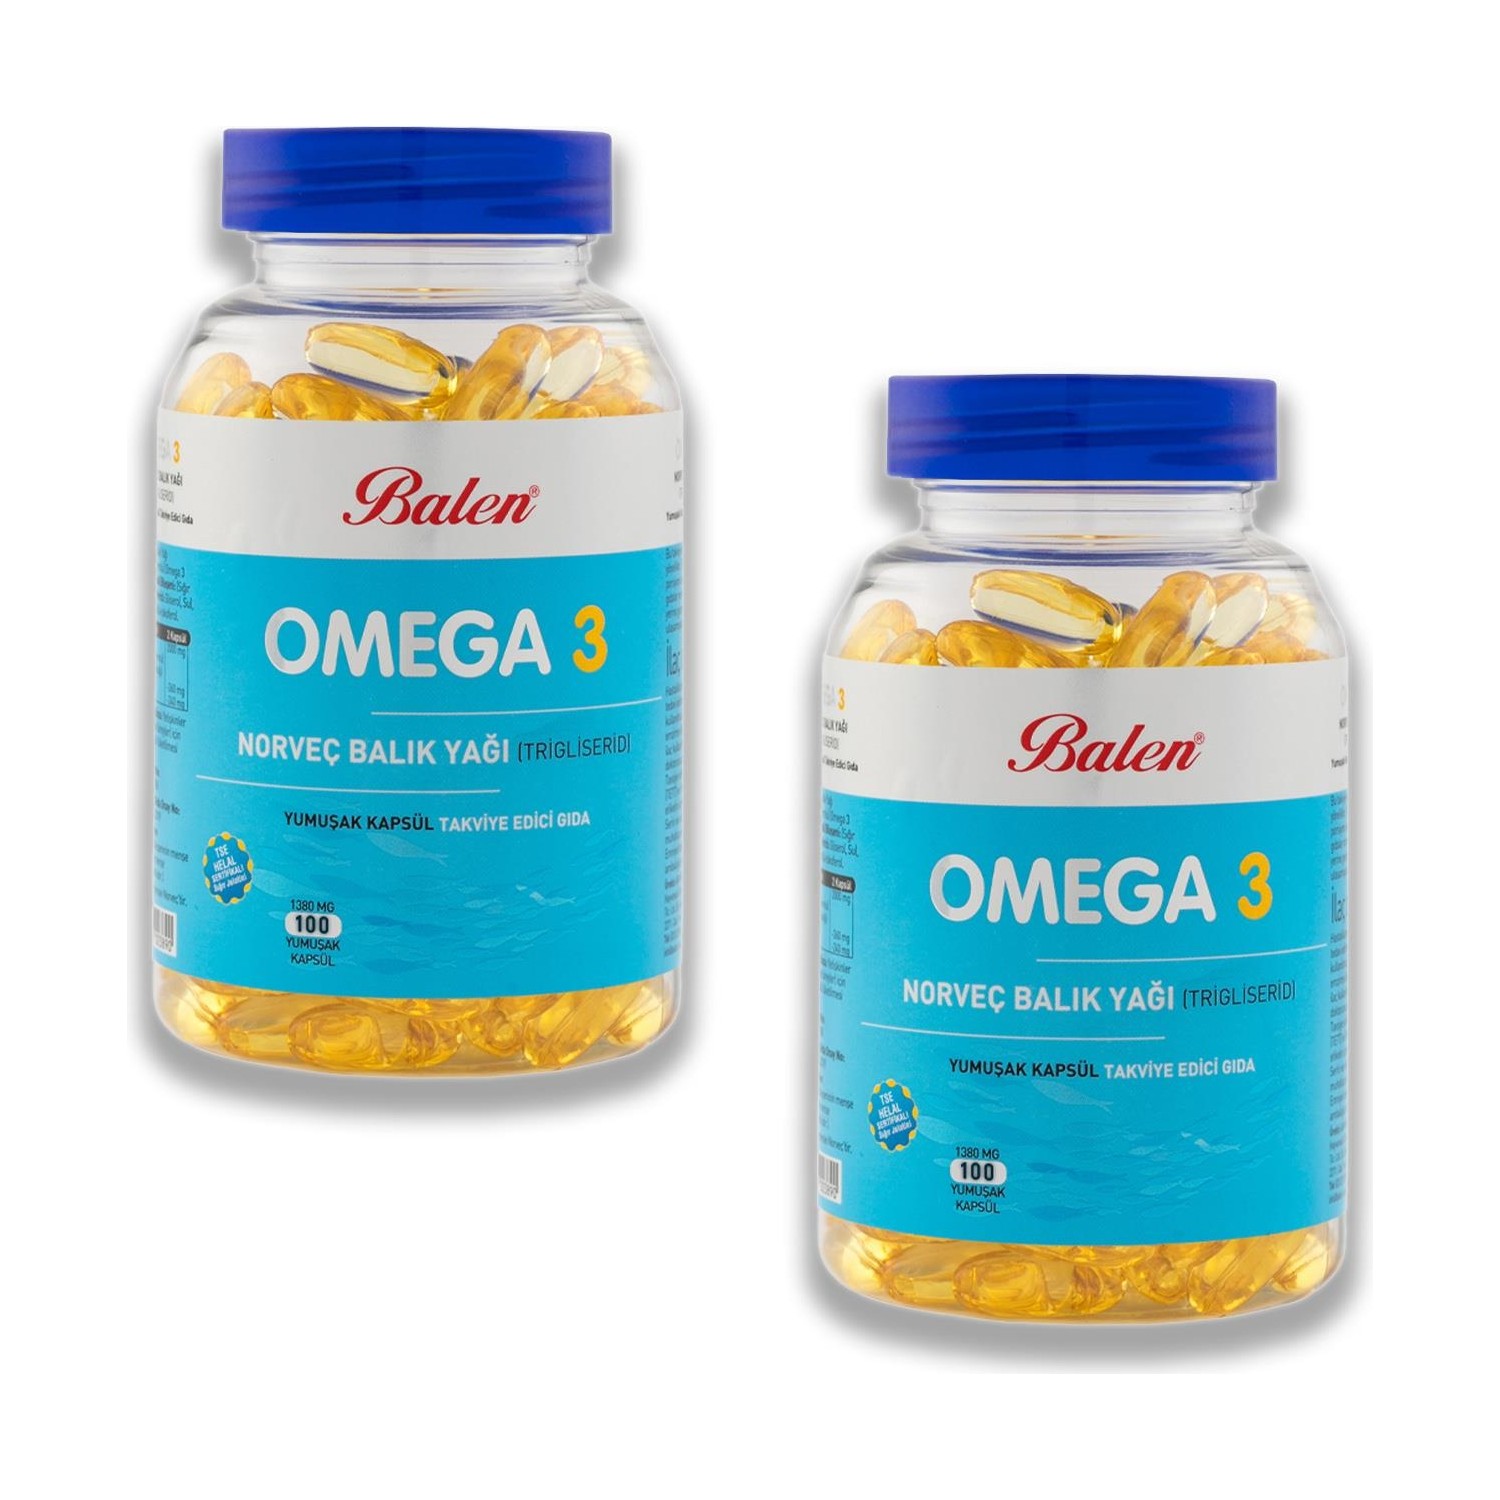 норвежский рыбий жир balen omega 3 триглицерид 1380 мг 2 упаковки по 200 капсул Норвежский рыбий жир Balen Omega-3 (триглицерид) 1380 мг, 2 упаковки по 100 капсул